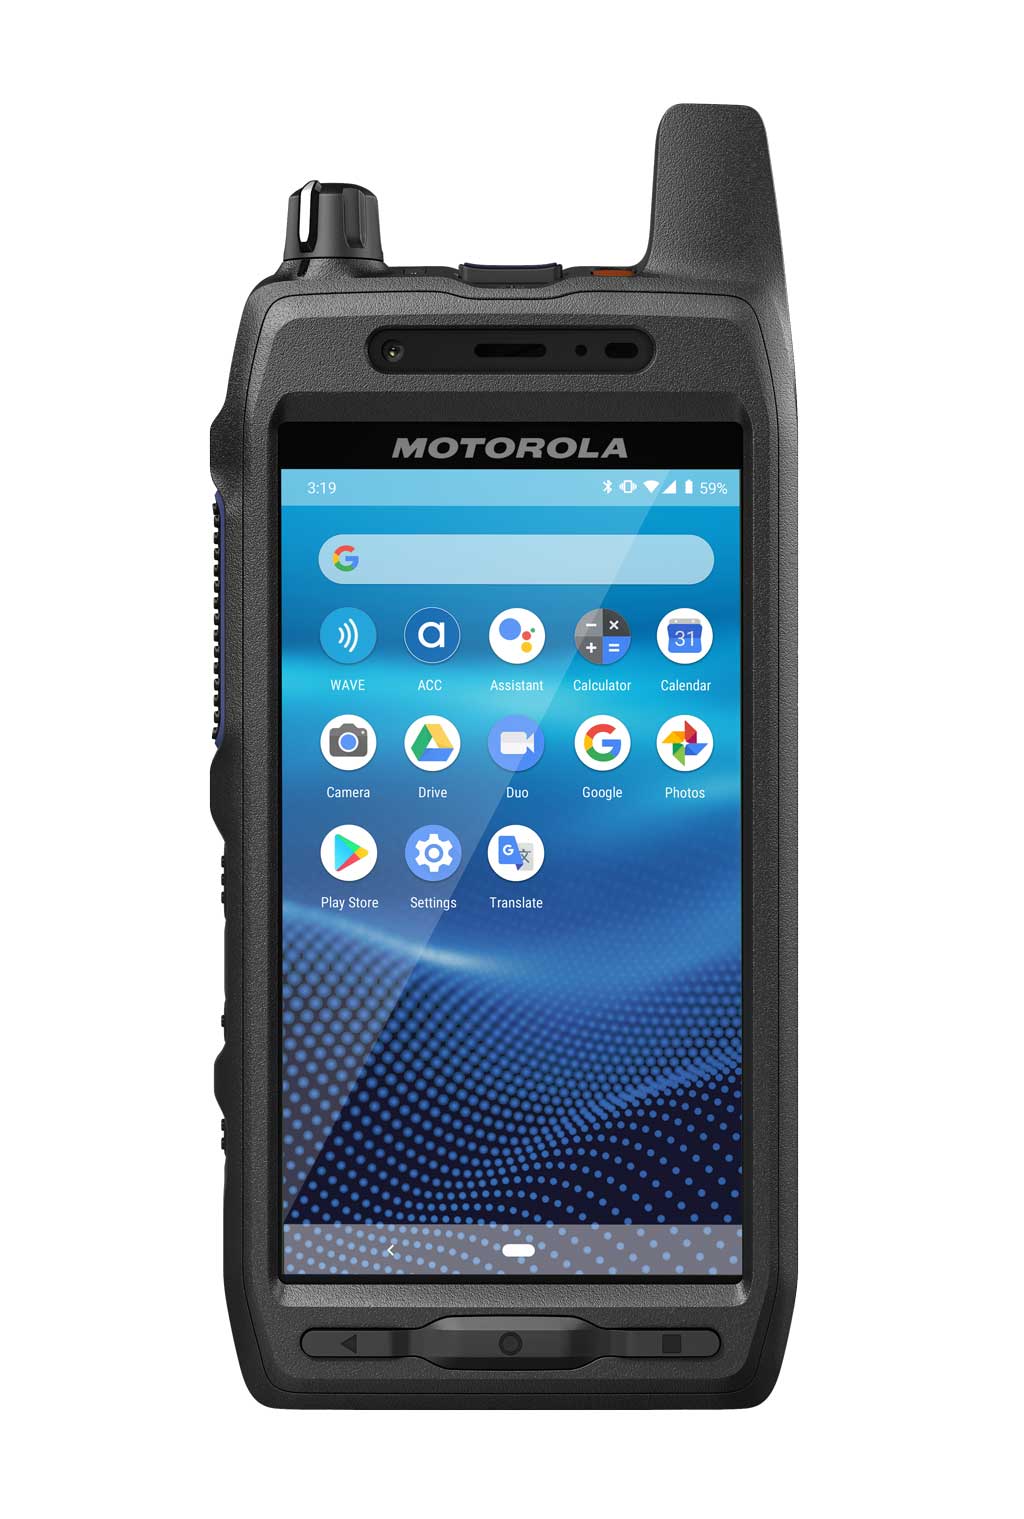 Motorola EVOLVE Smartphone 2900mAh Li-Ion Battery and Charger HK2157